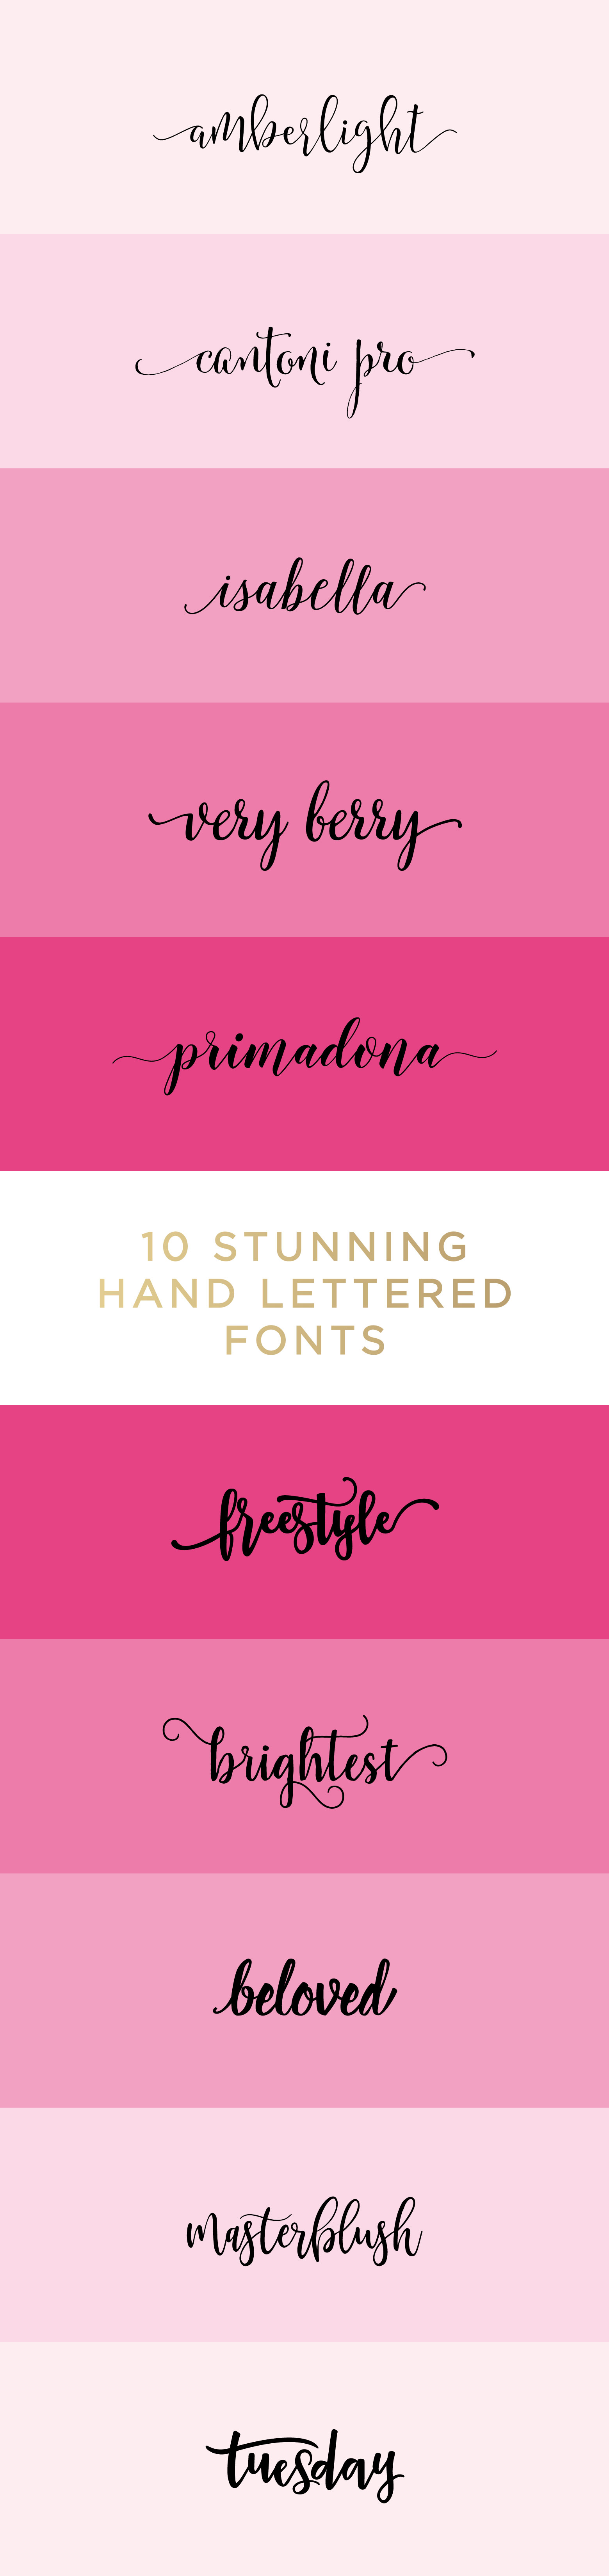 10 Stunning Hand Lettered Fonts for a Pretty Feminine Brand Design